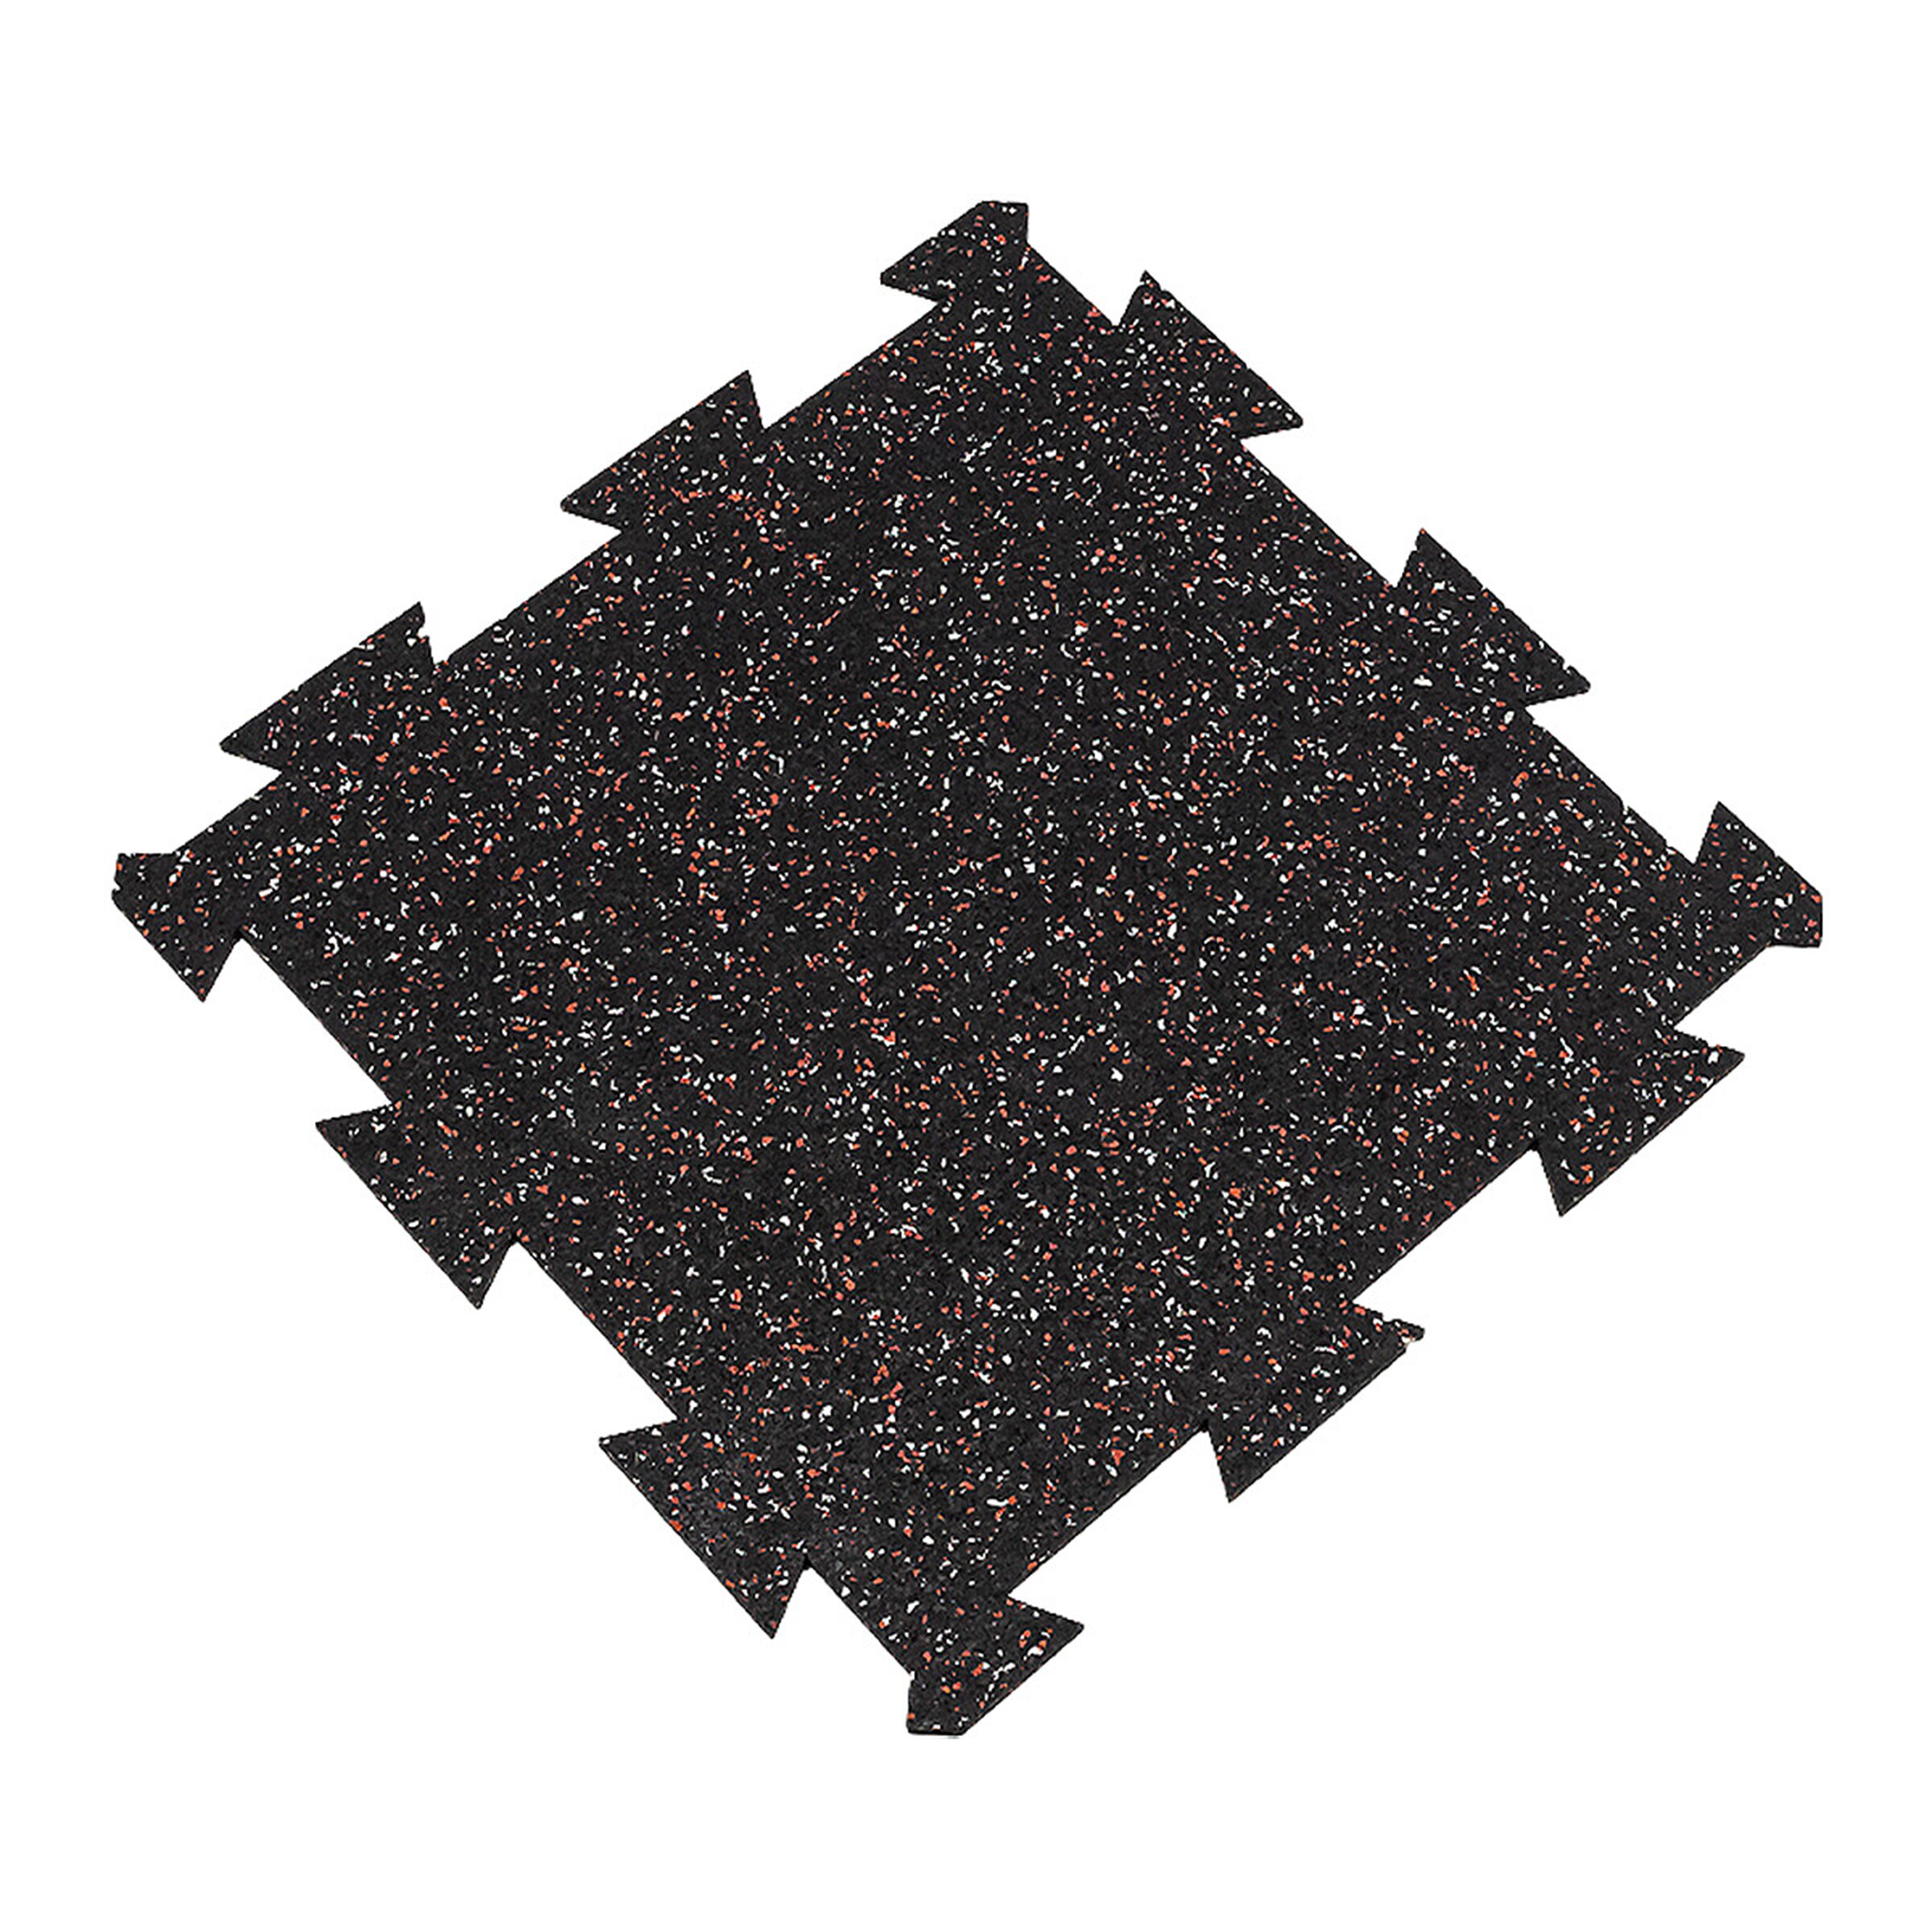 Černo-bílo-červená gumová modulová puzzle dlaždice (střed) FLOMA FitFlo SF1050 - délka 50 cm, šířka 50 cm, výška 1 cm